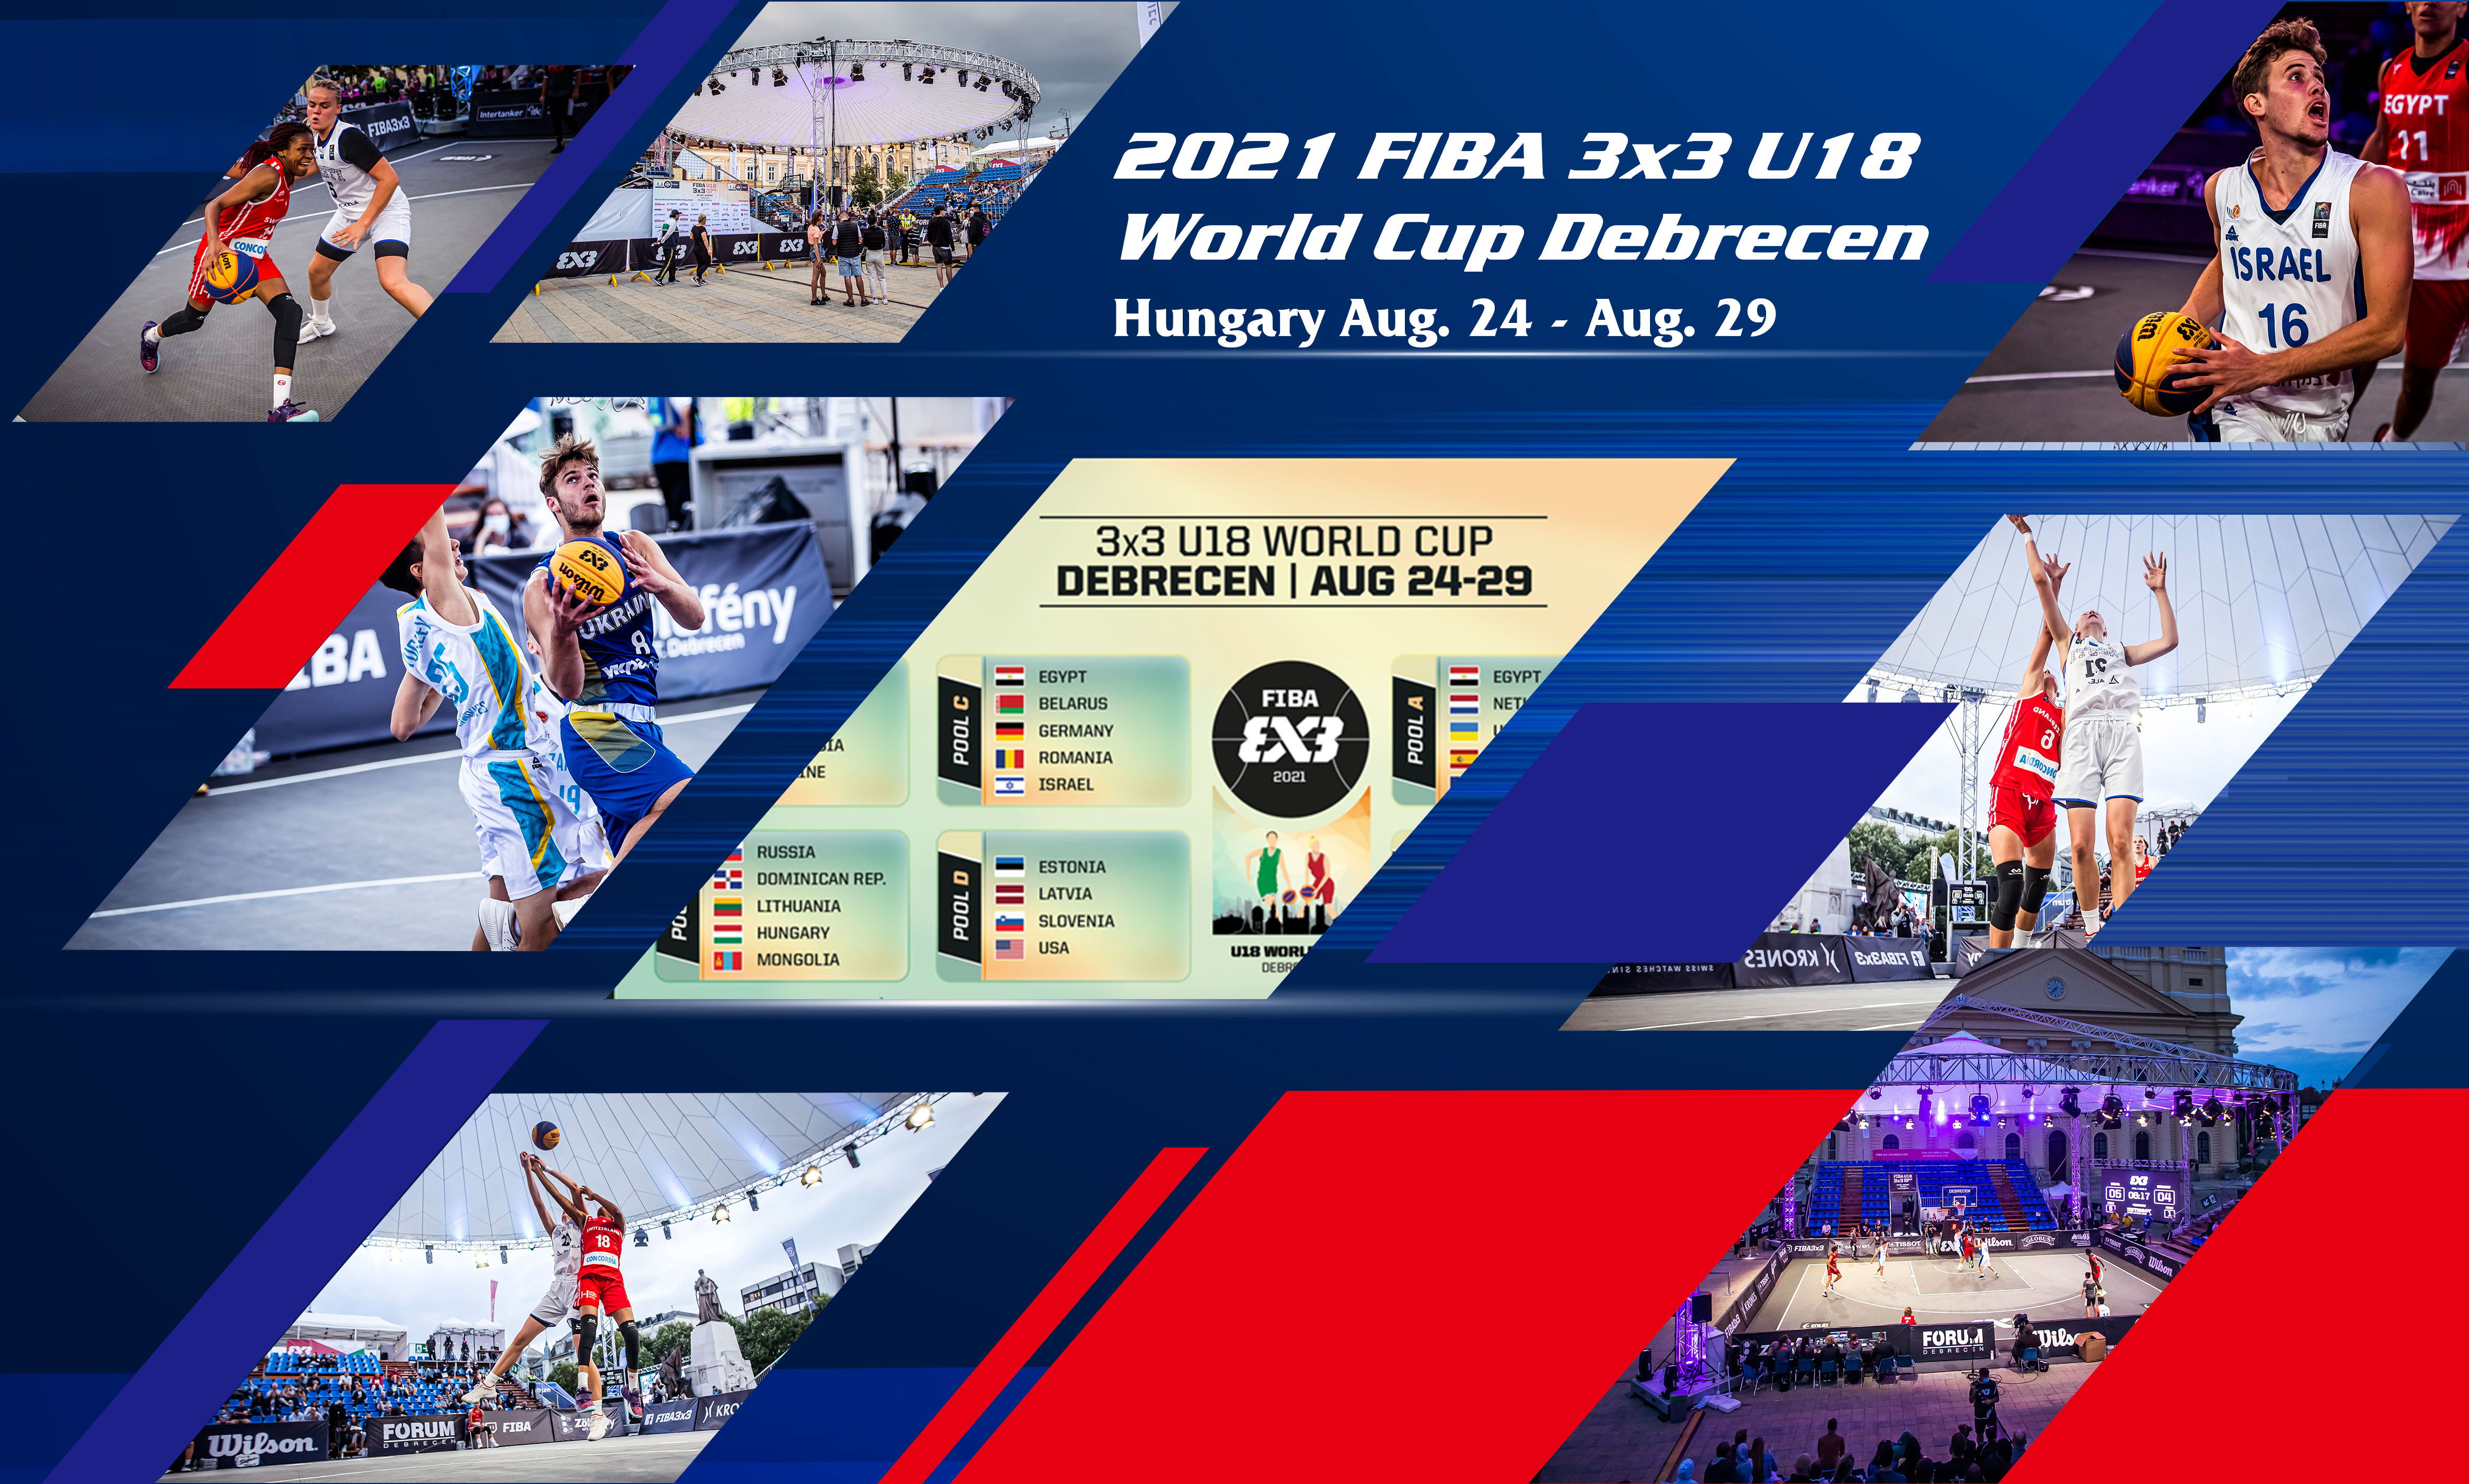 2021 FIBA 3x3 U18 World Cup